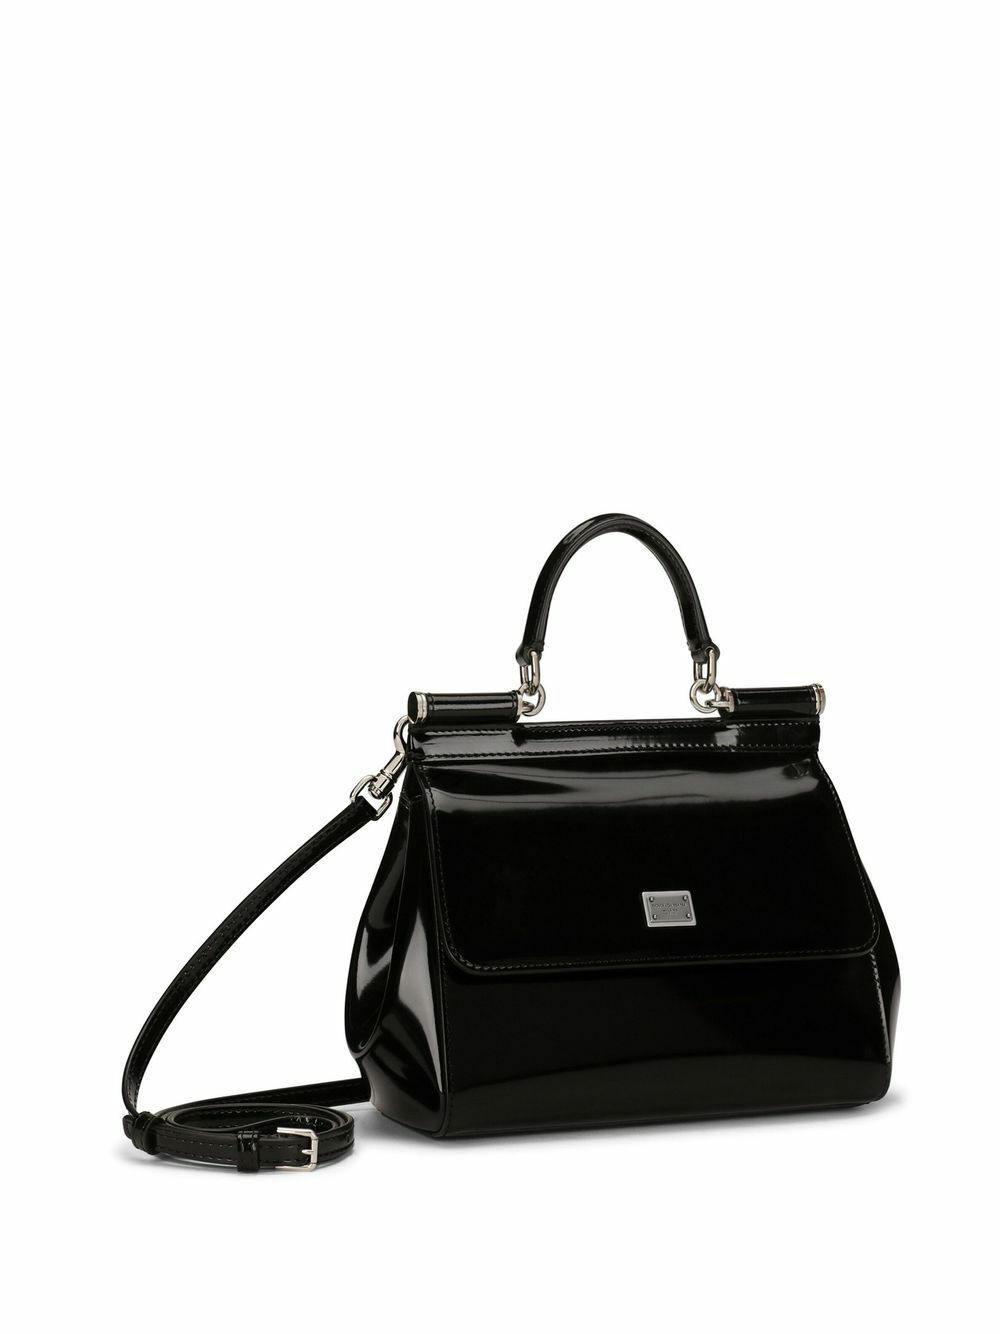 Dolce & Gabbana Sicily Small Shiny Leather Handbag in Natural